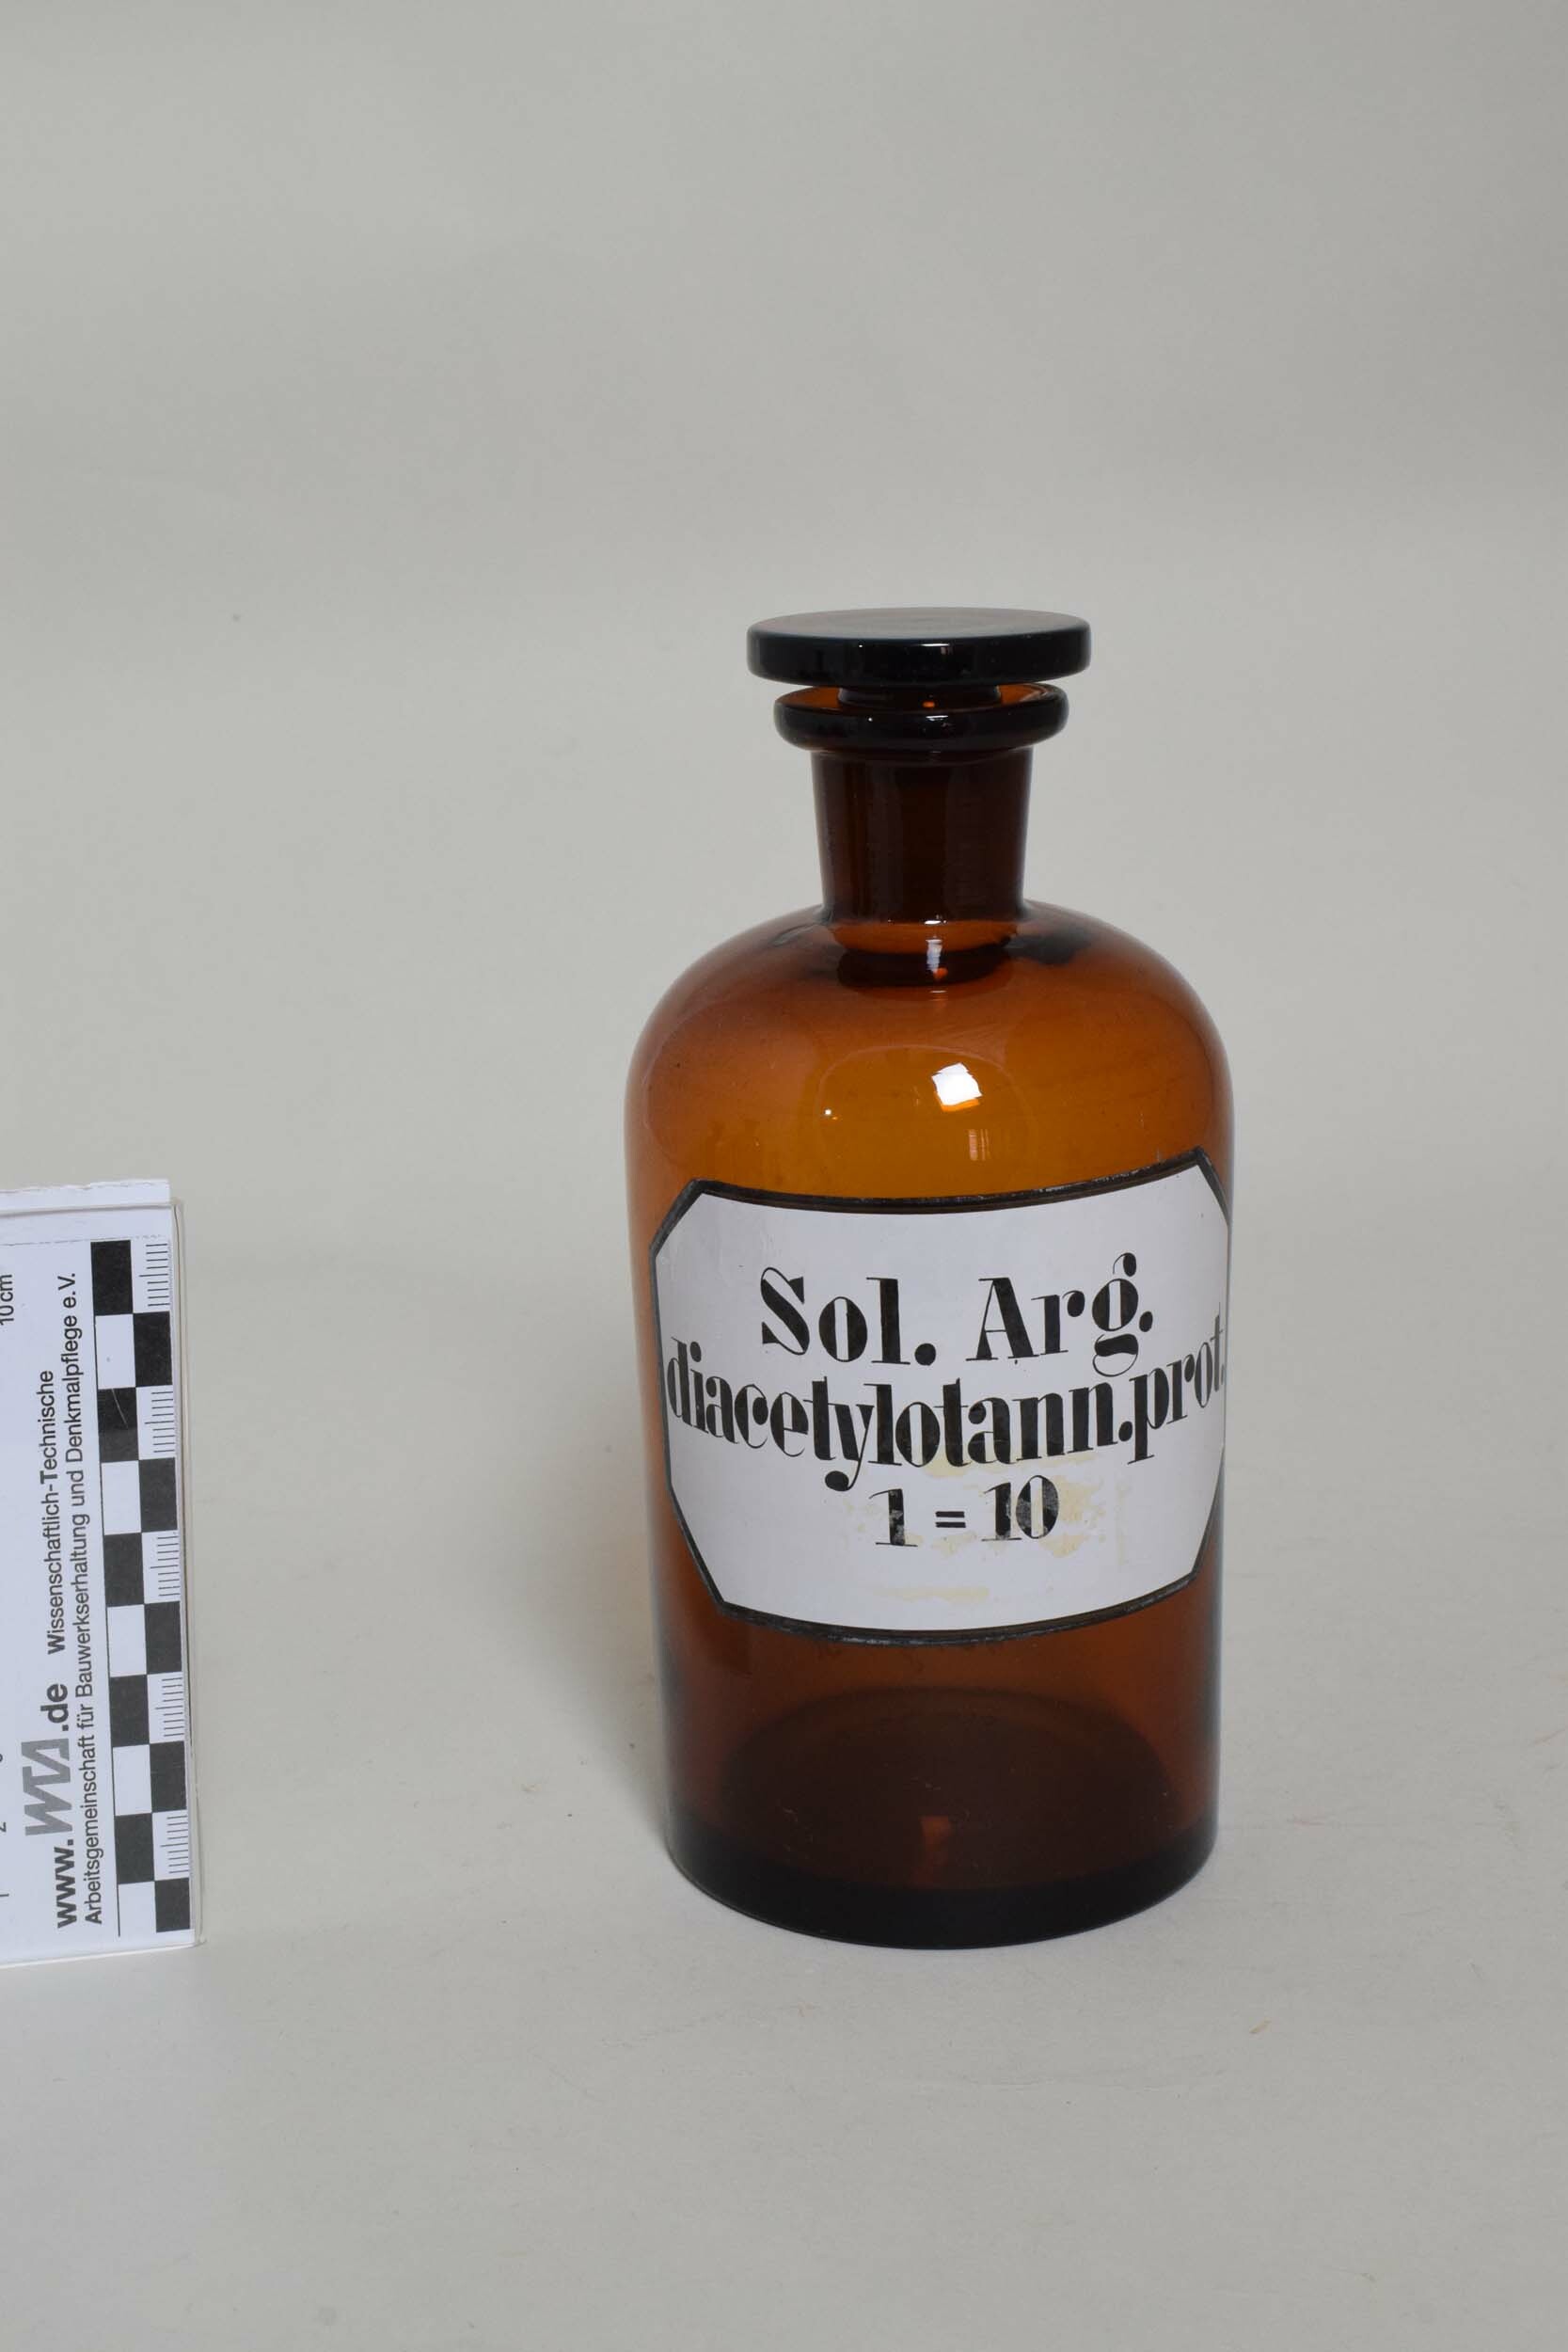 Apothekenflasche "Sol.bArg.bdiacetylotann.bprot. 1=10" (Heimatmuseum Dohna CC BY-NC-SA)